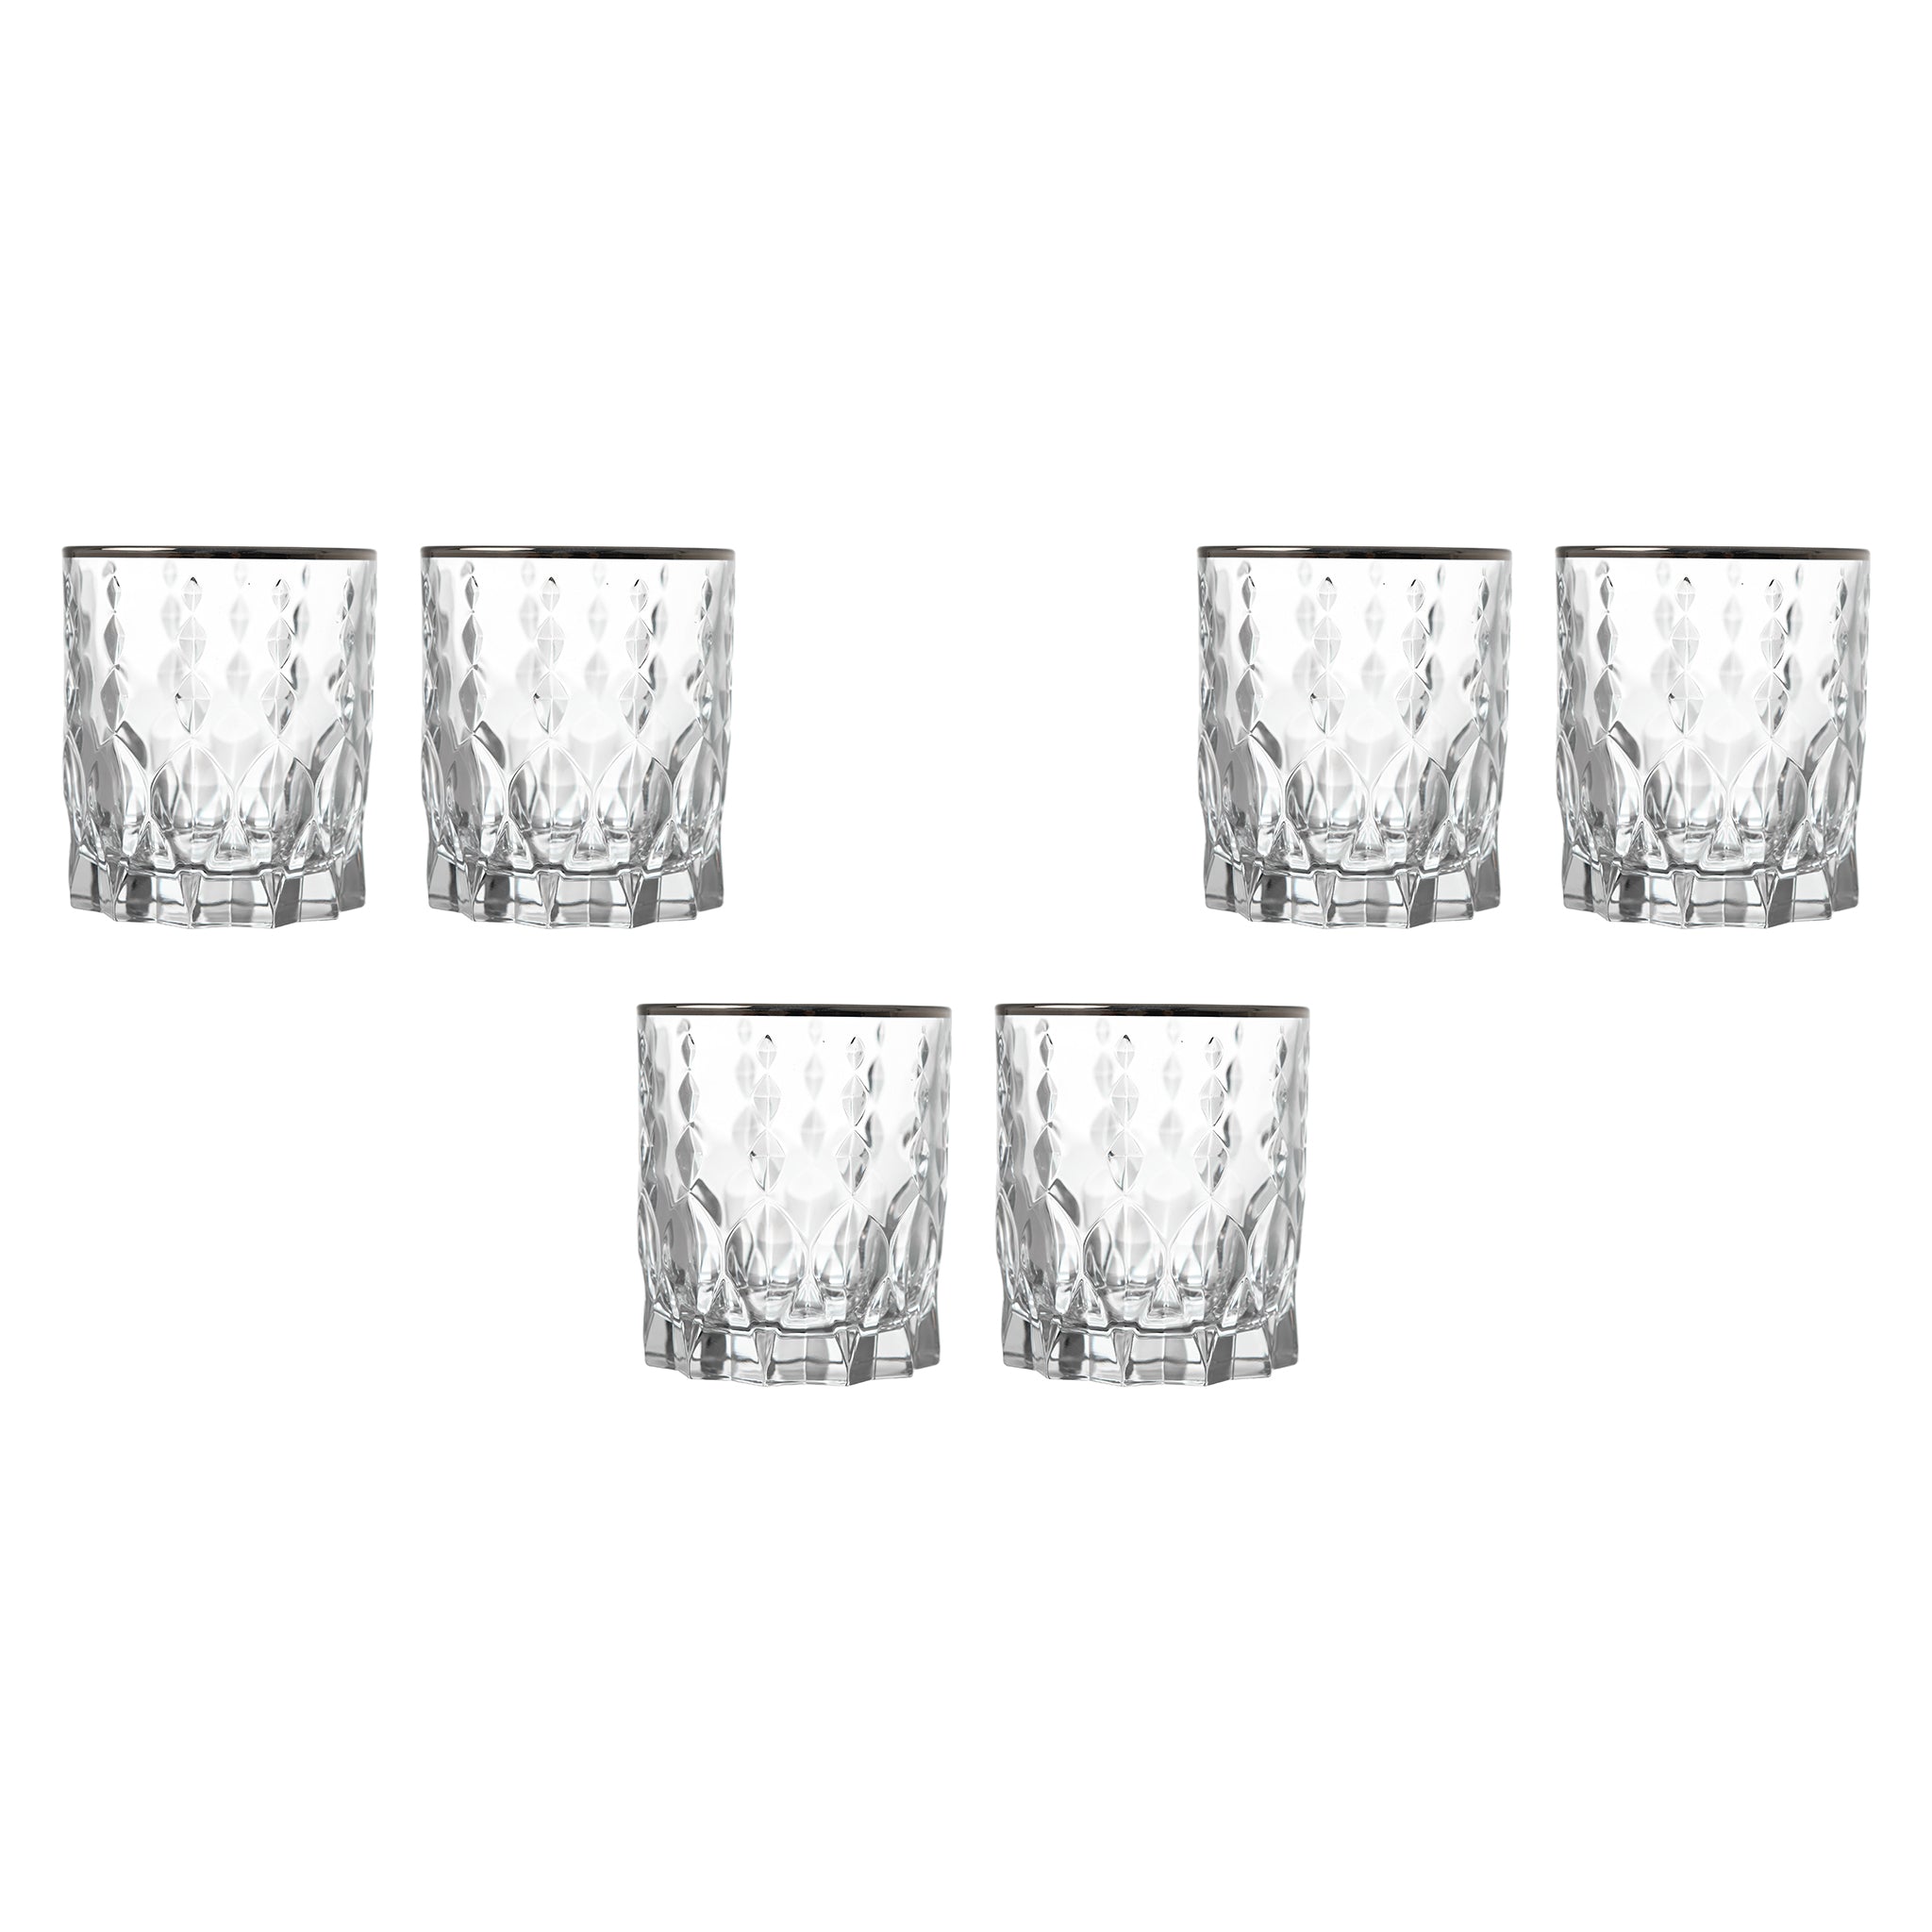 RCR Italy - Tumbler Glass Set 6 Pieces Silver - 310ml - 380003170